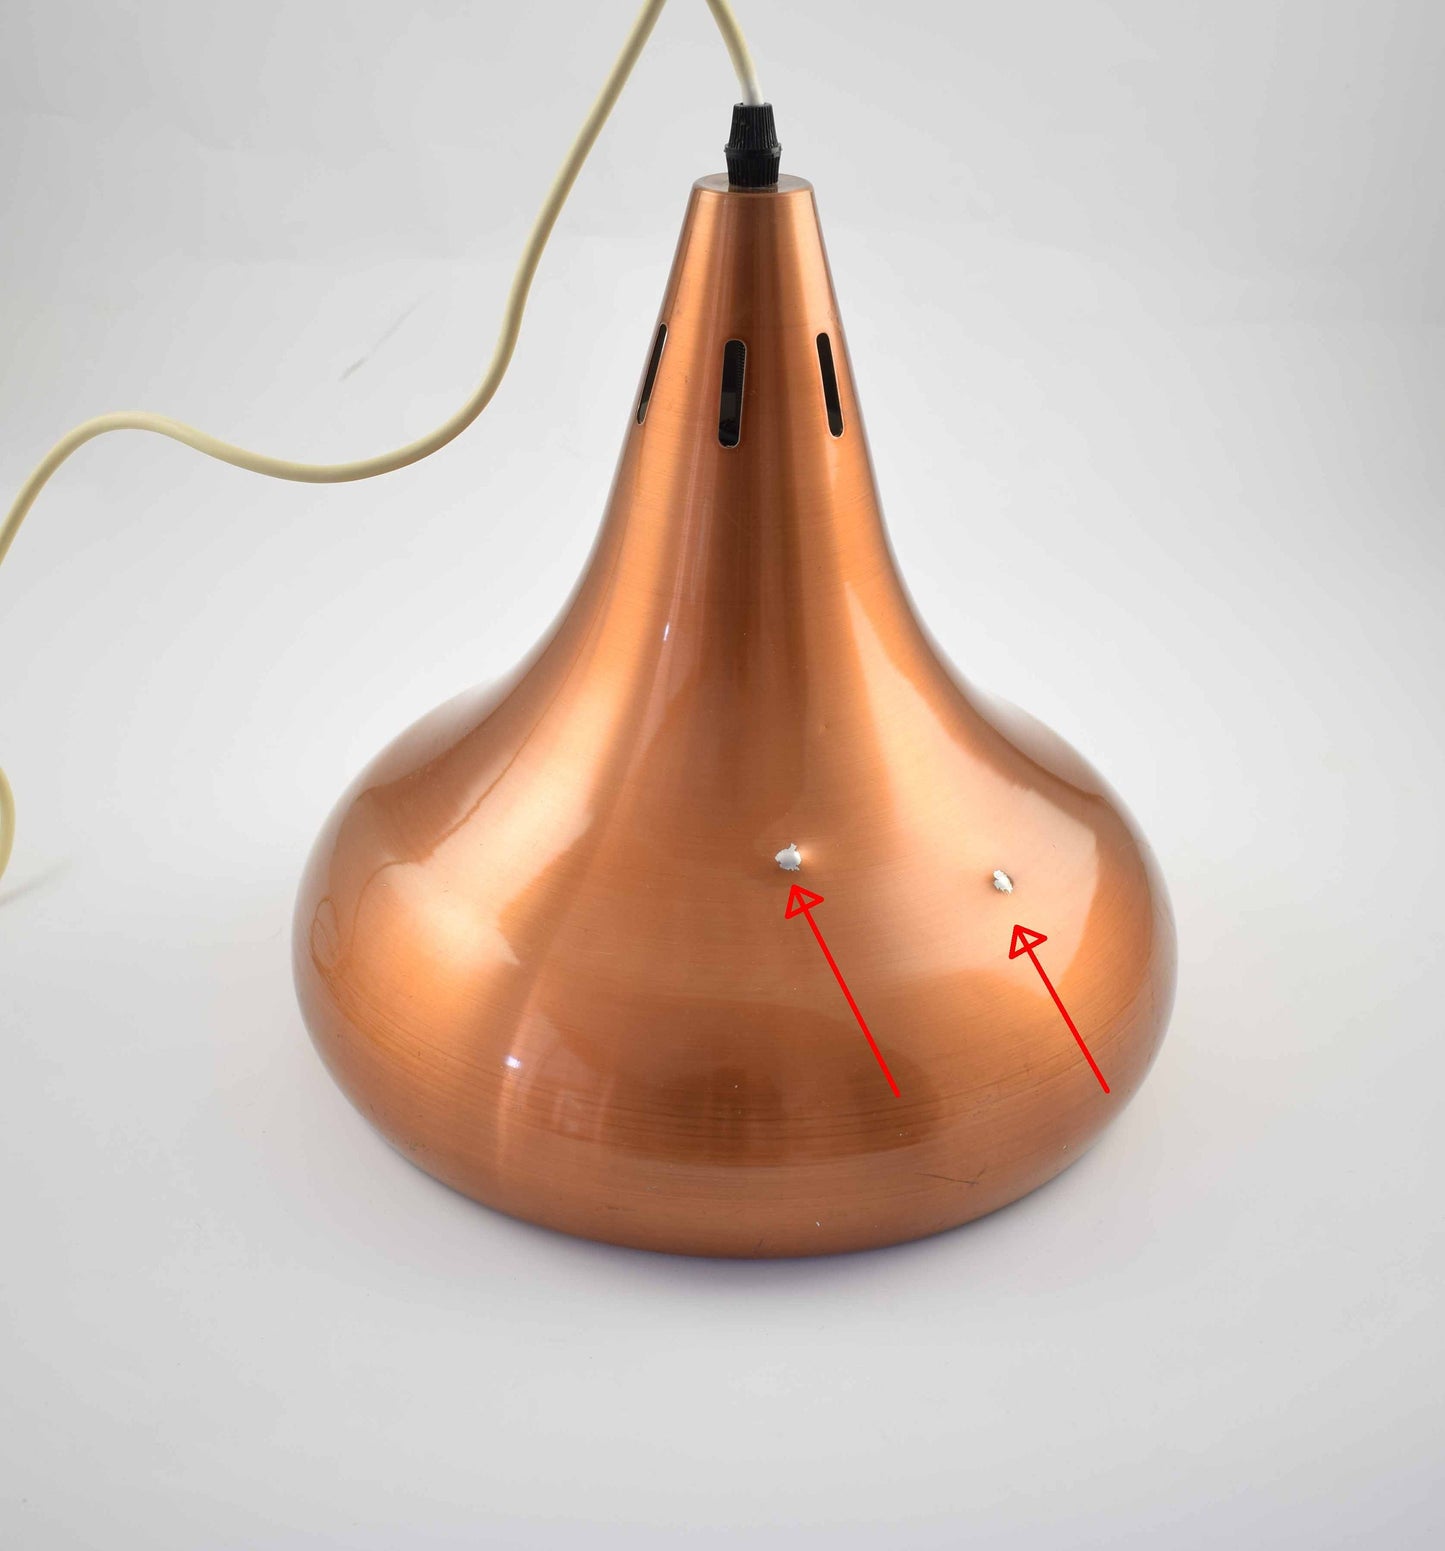 Brushed alumininum copper colored carambole billiard lamp